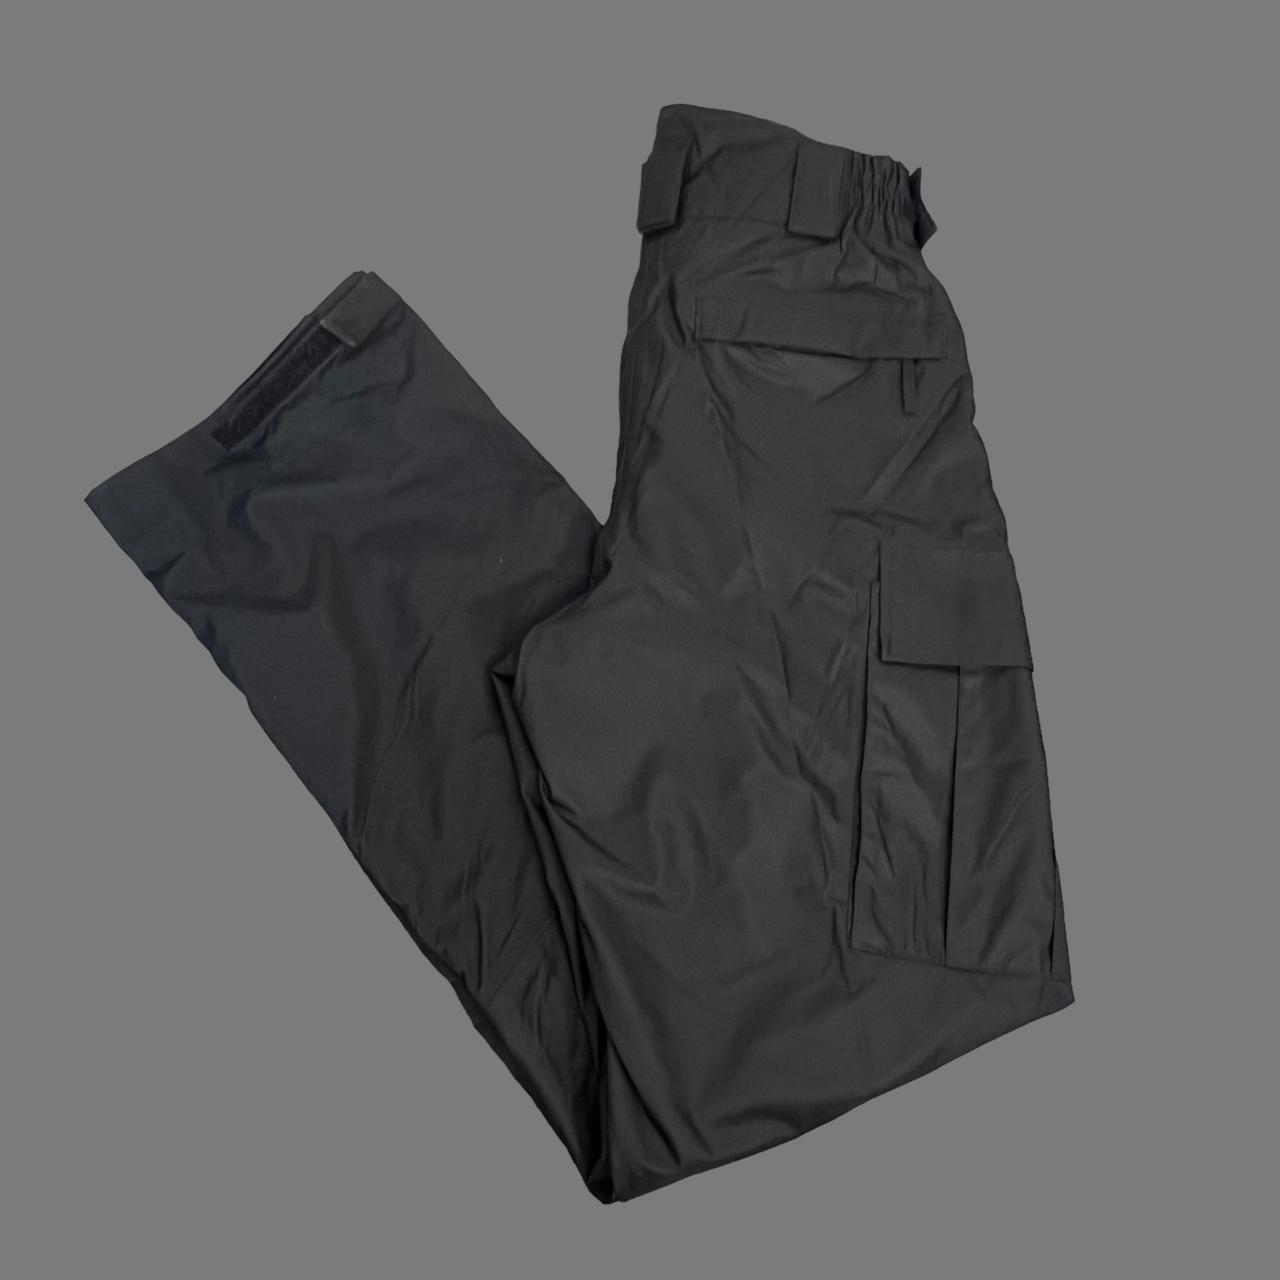 5.11 Tactical Patrol black rain pants NWT 😎 These... - Depop